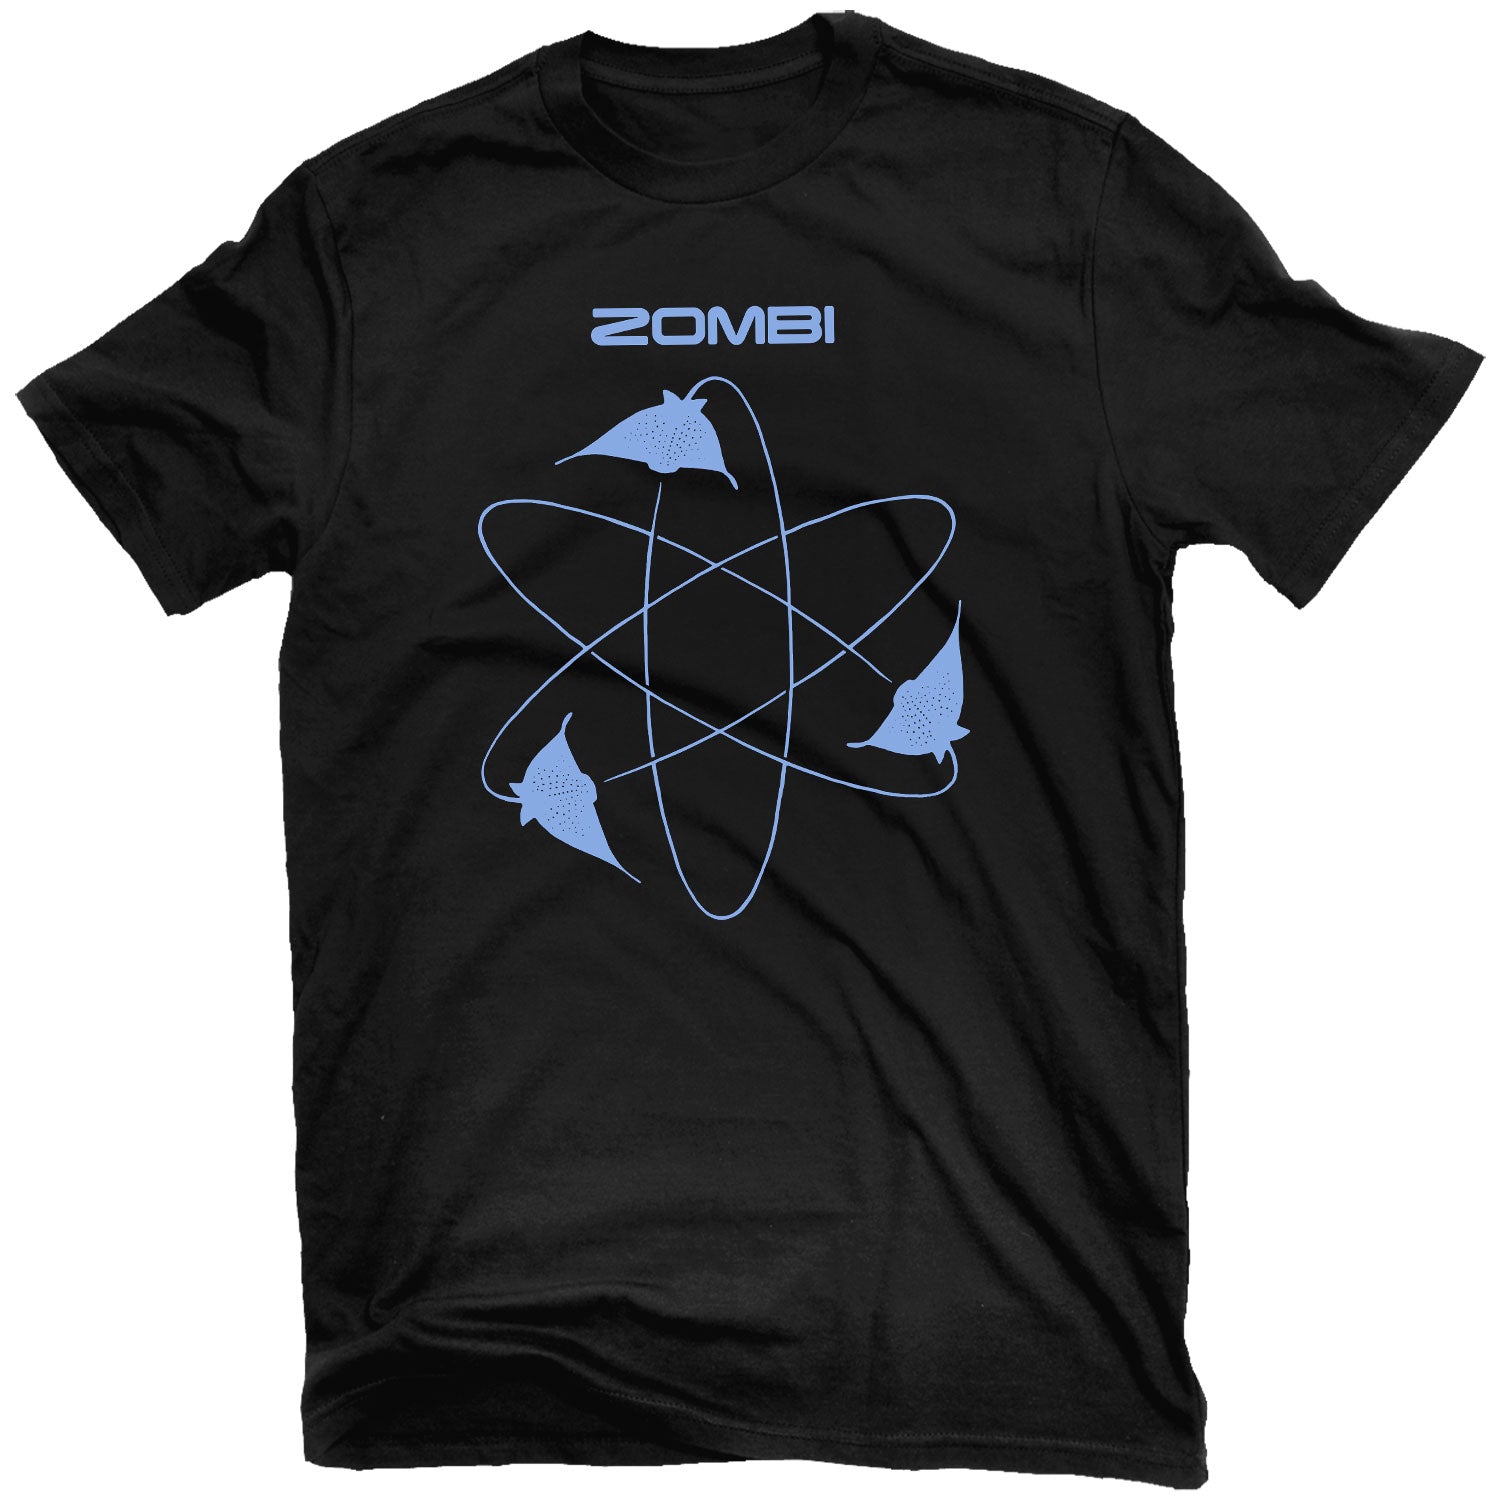 Zombi "Liquid Crystal" T-Shirt